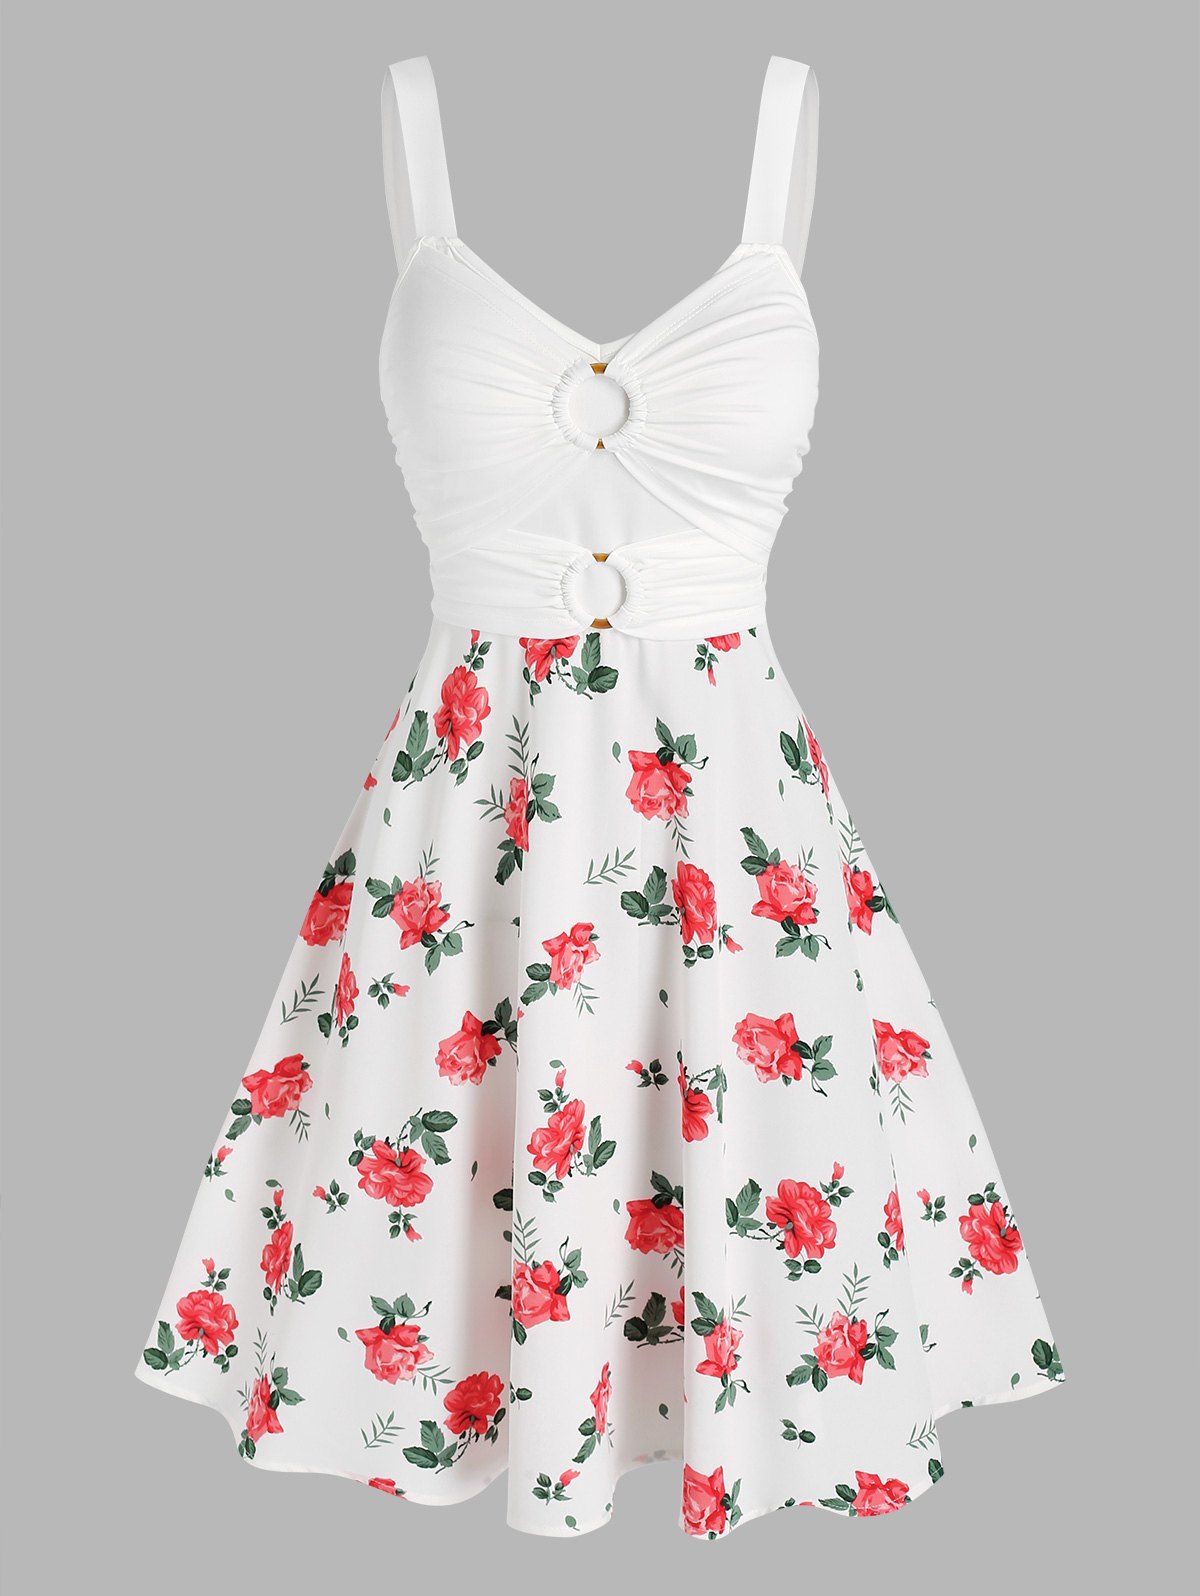 Floral Print Sundress O Ring Summer Mini Dress - WHITE M